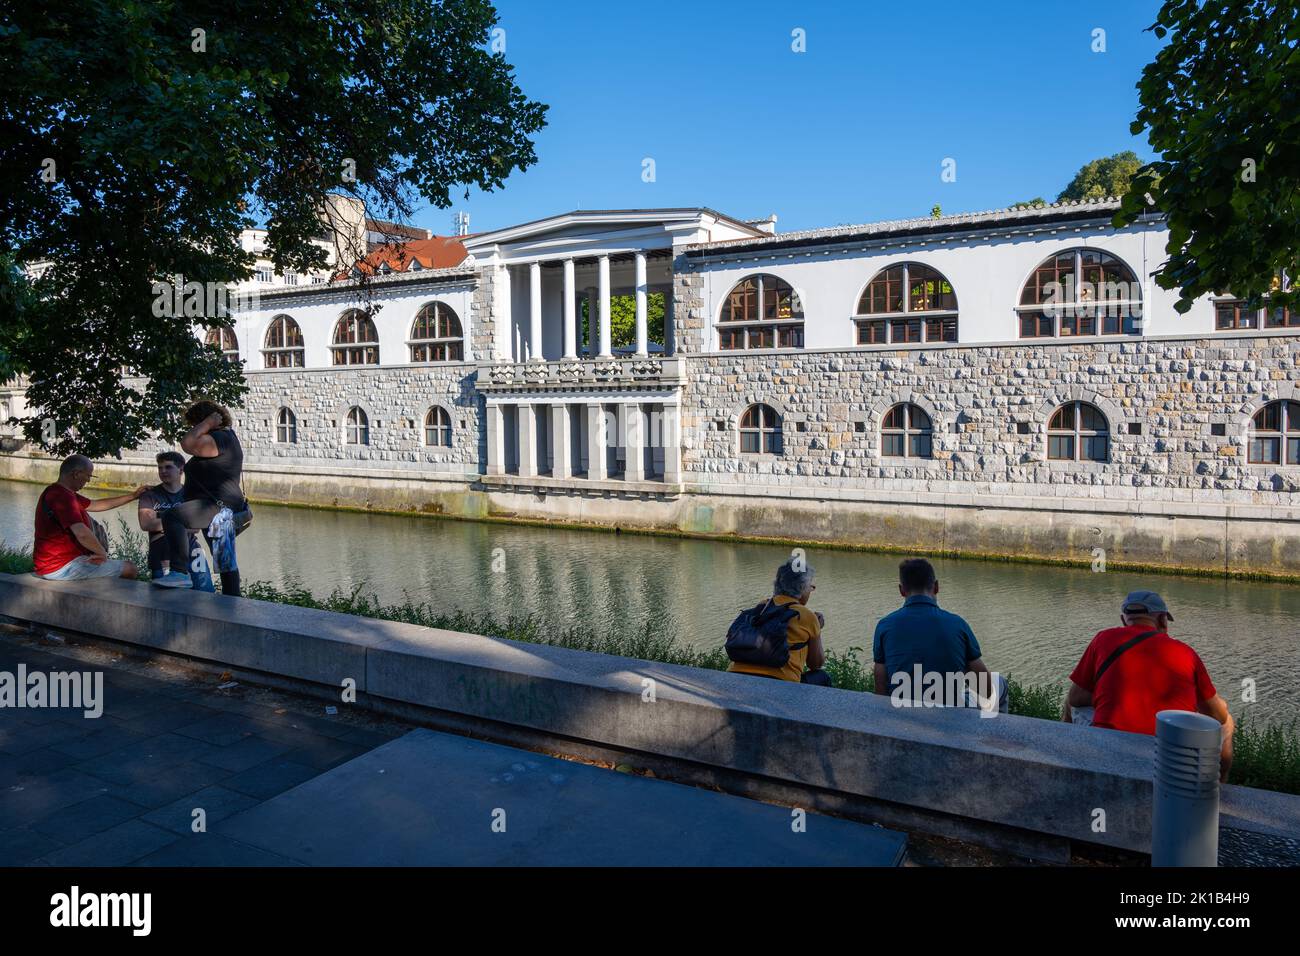 City of Ljubljana in Slovenia, people at Ljubljanica River waterfront looking at the Plecnik Arcades, city landmark. Stock Photo